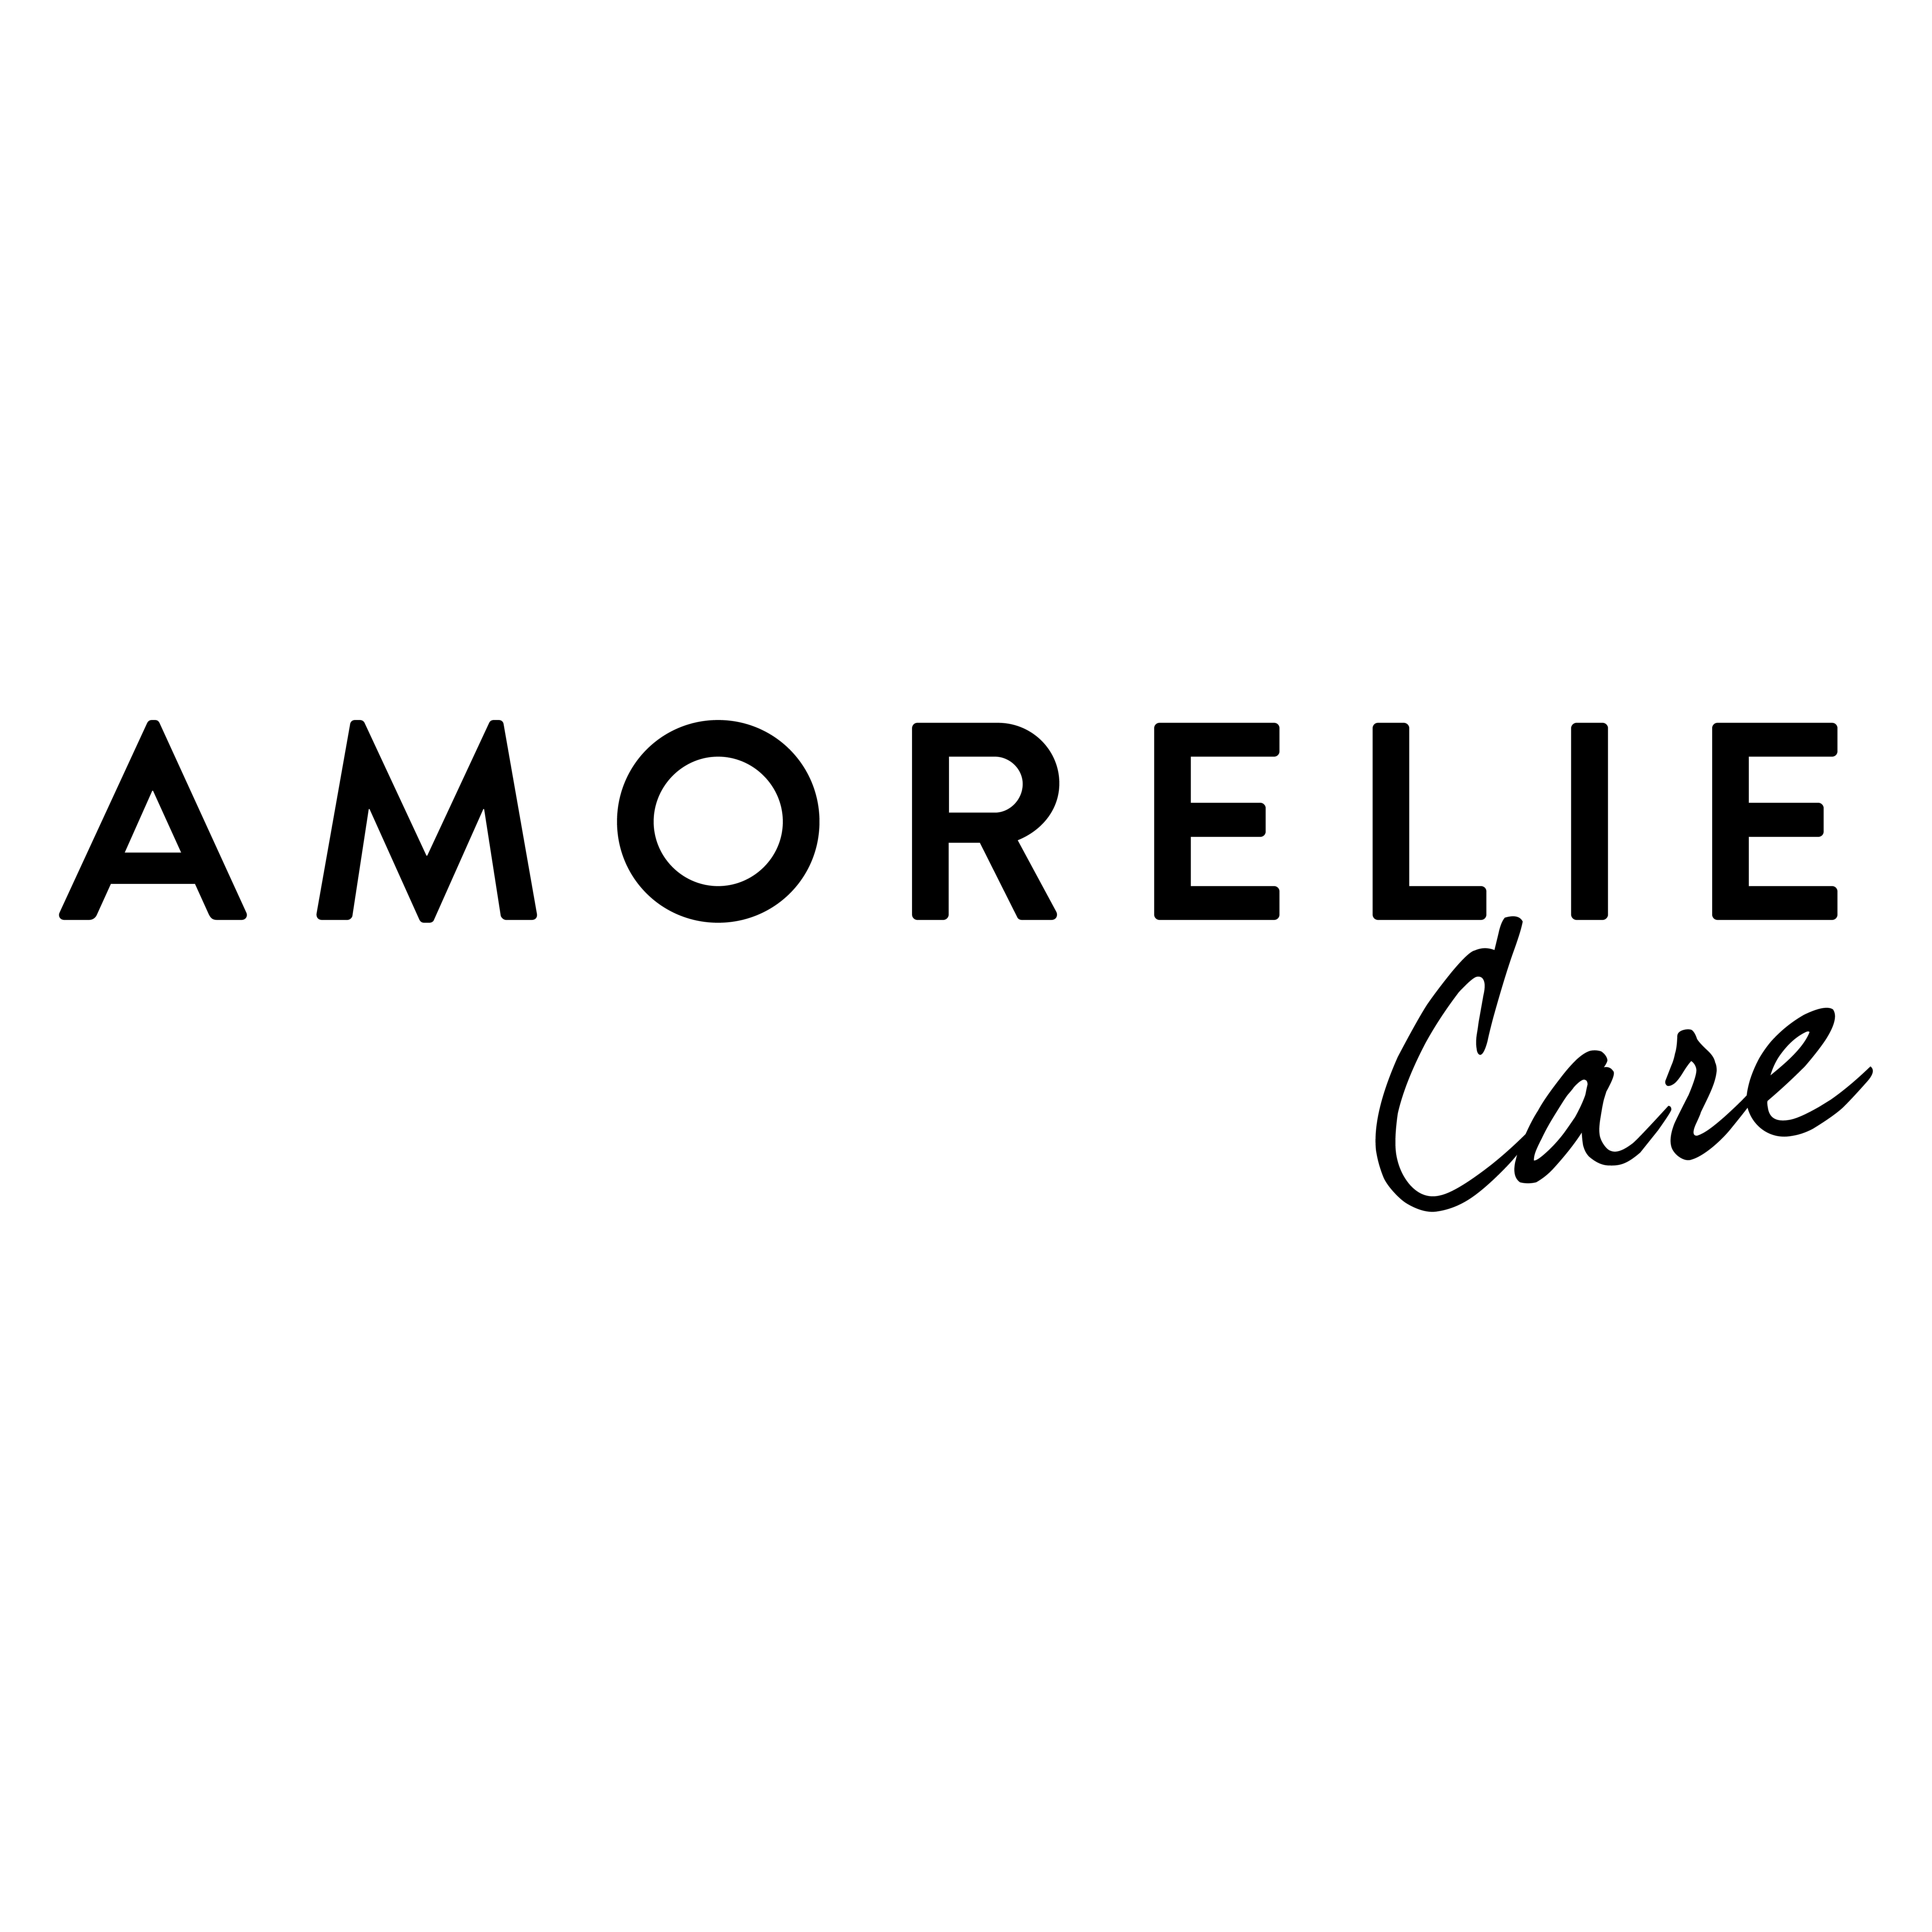 AMORELIE Care